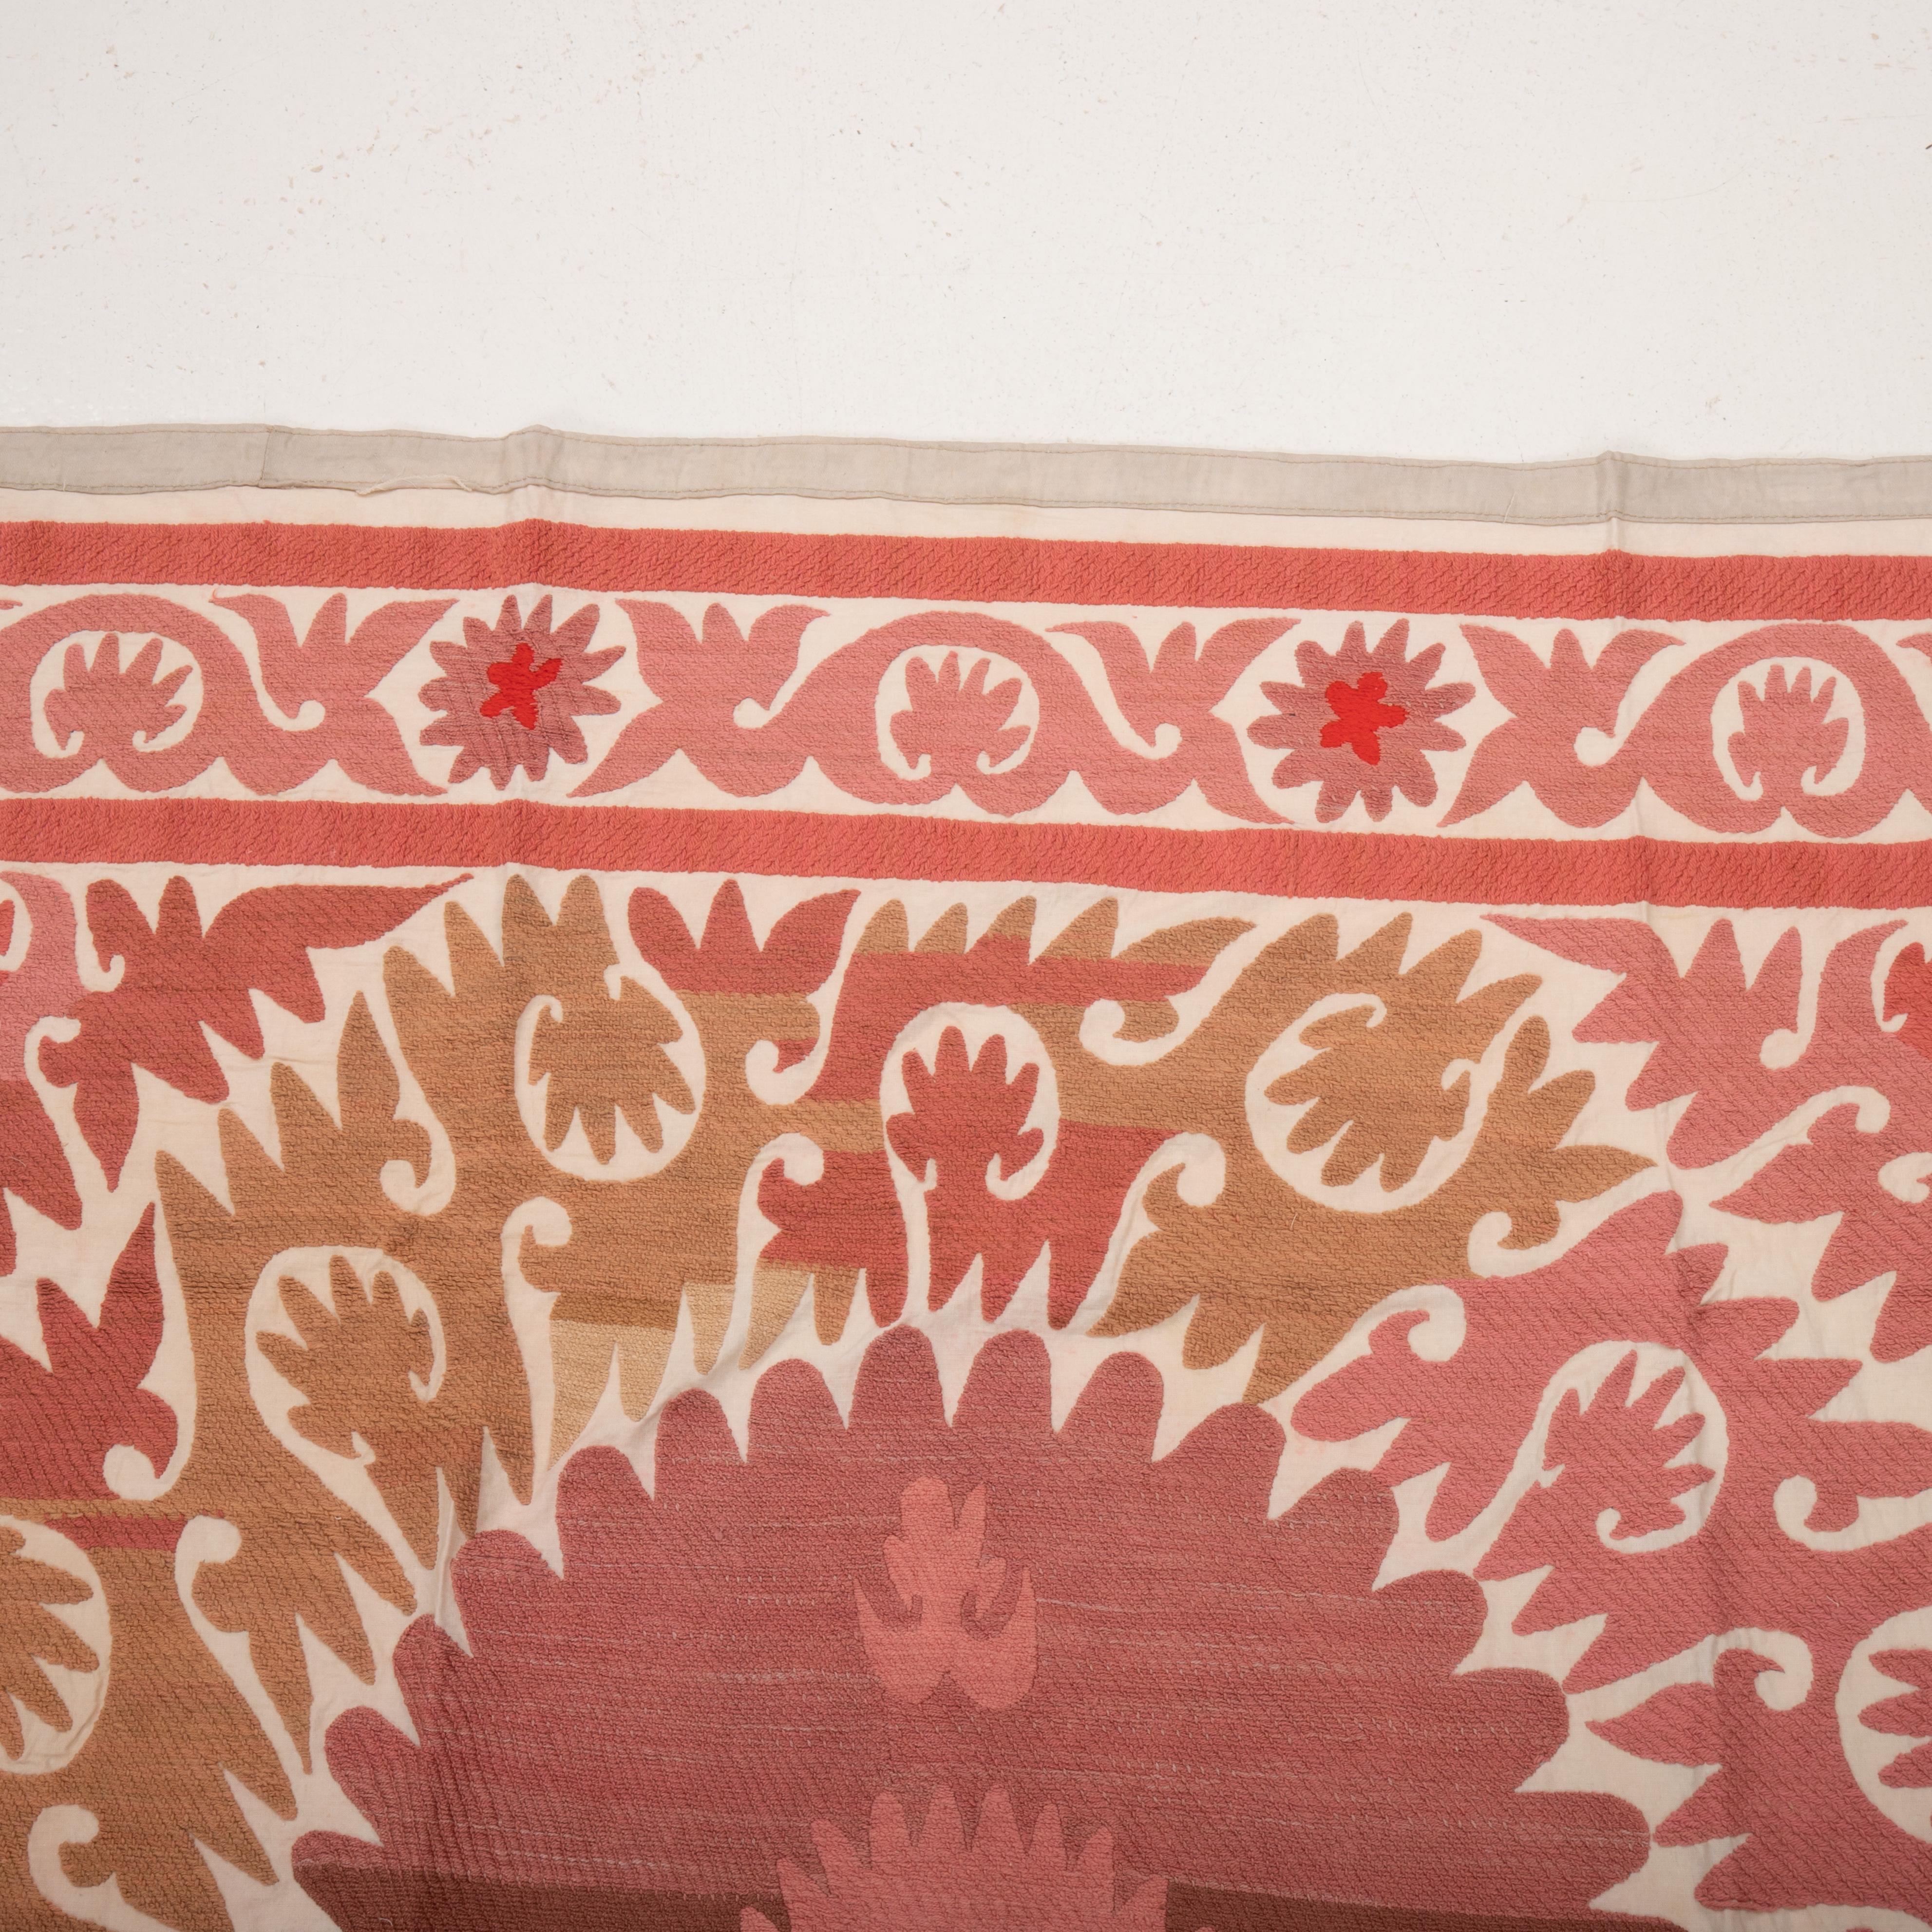 Cotton Folk Art Suzani Embroidery from 1970s, Uzbekistan For Sale